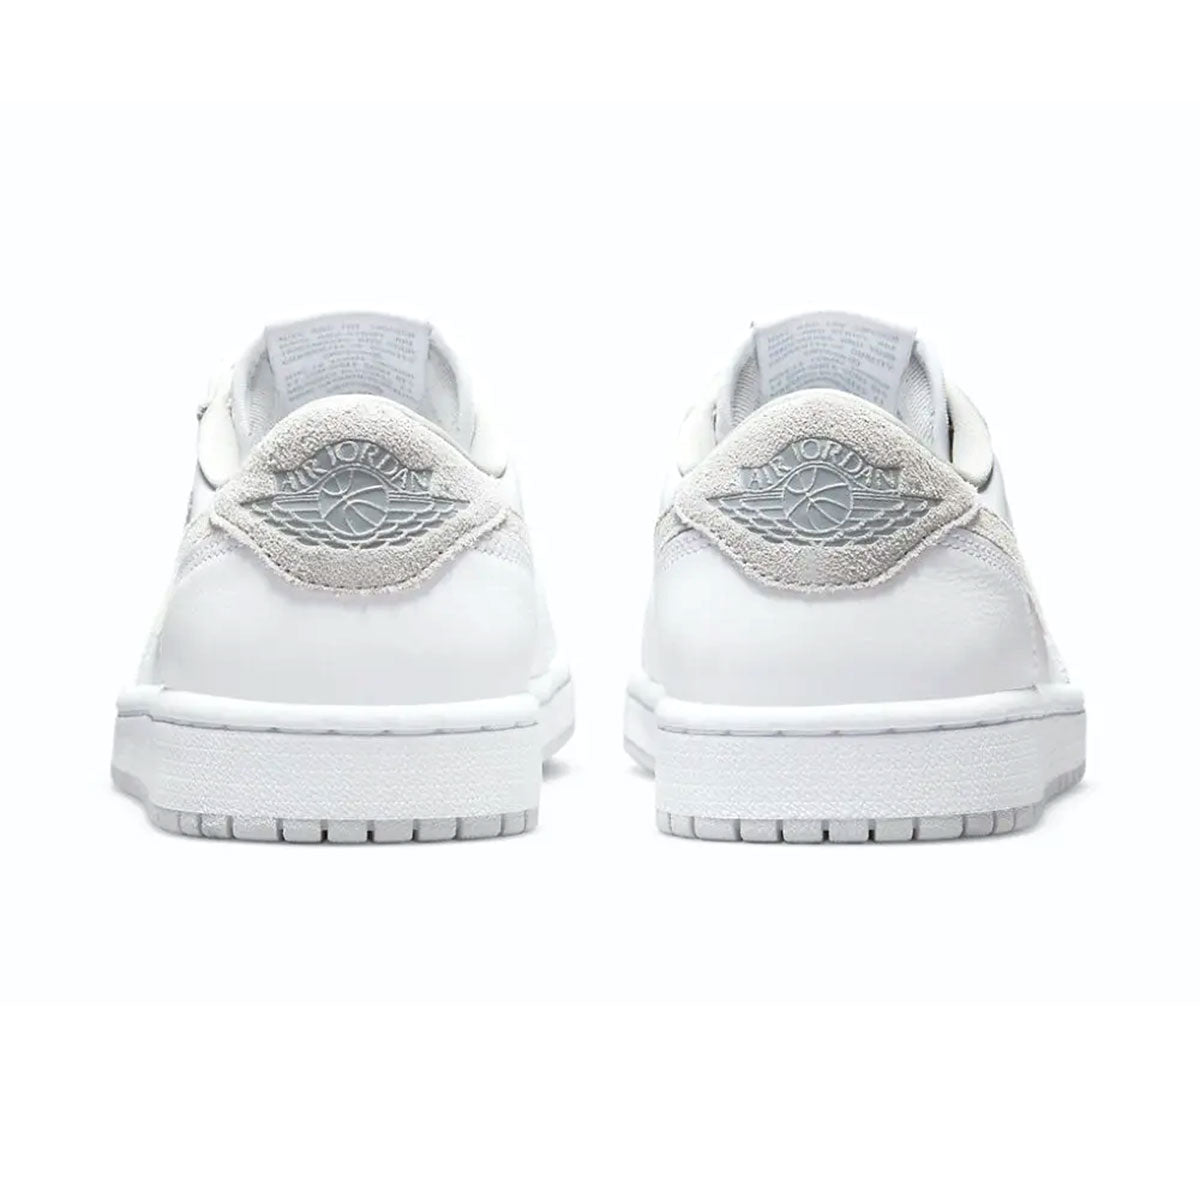 NIKE AIR JORDAN 1 LOW OG（白色/顆粒灰色） Nike Air Jordan 1 Low OG「白色/灰色」 [cz0790-100]